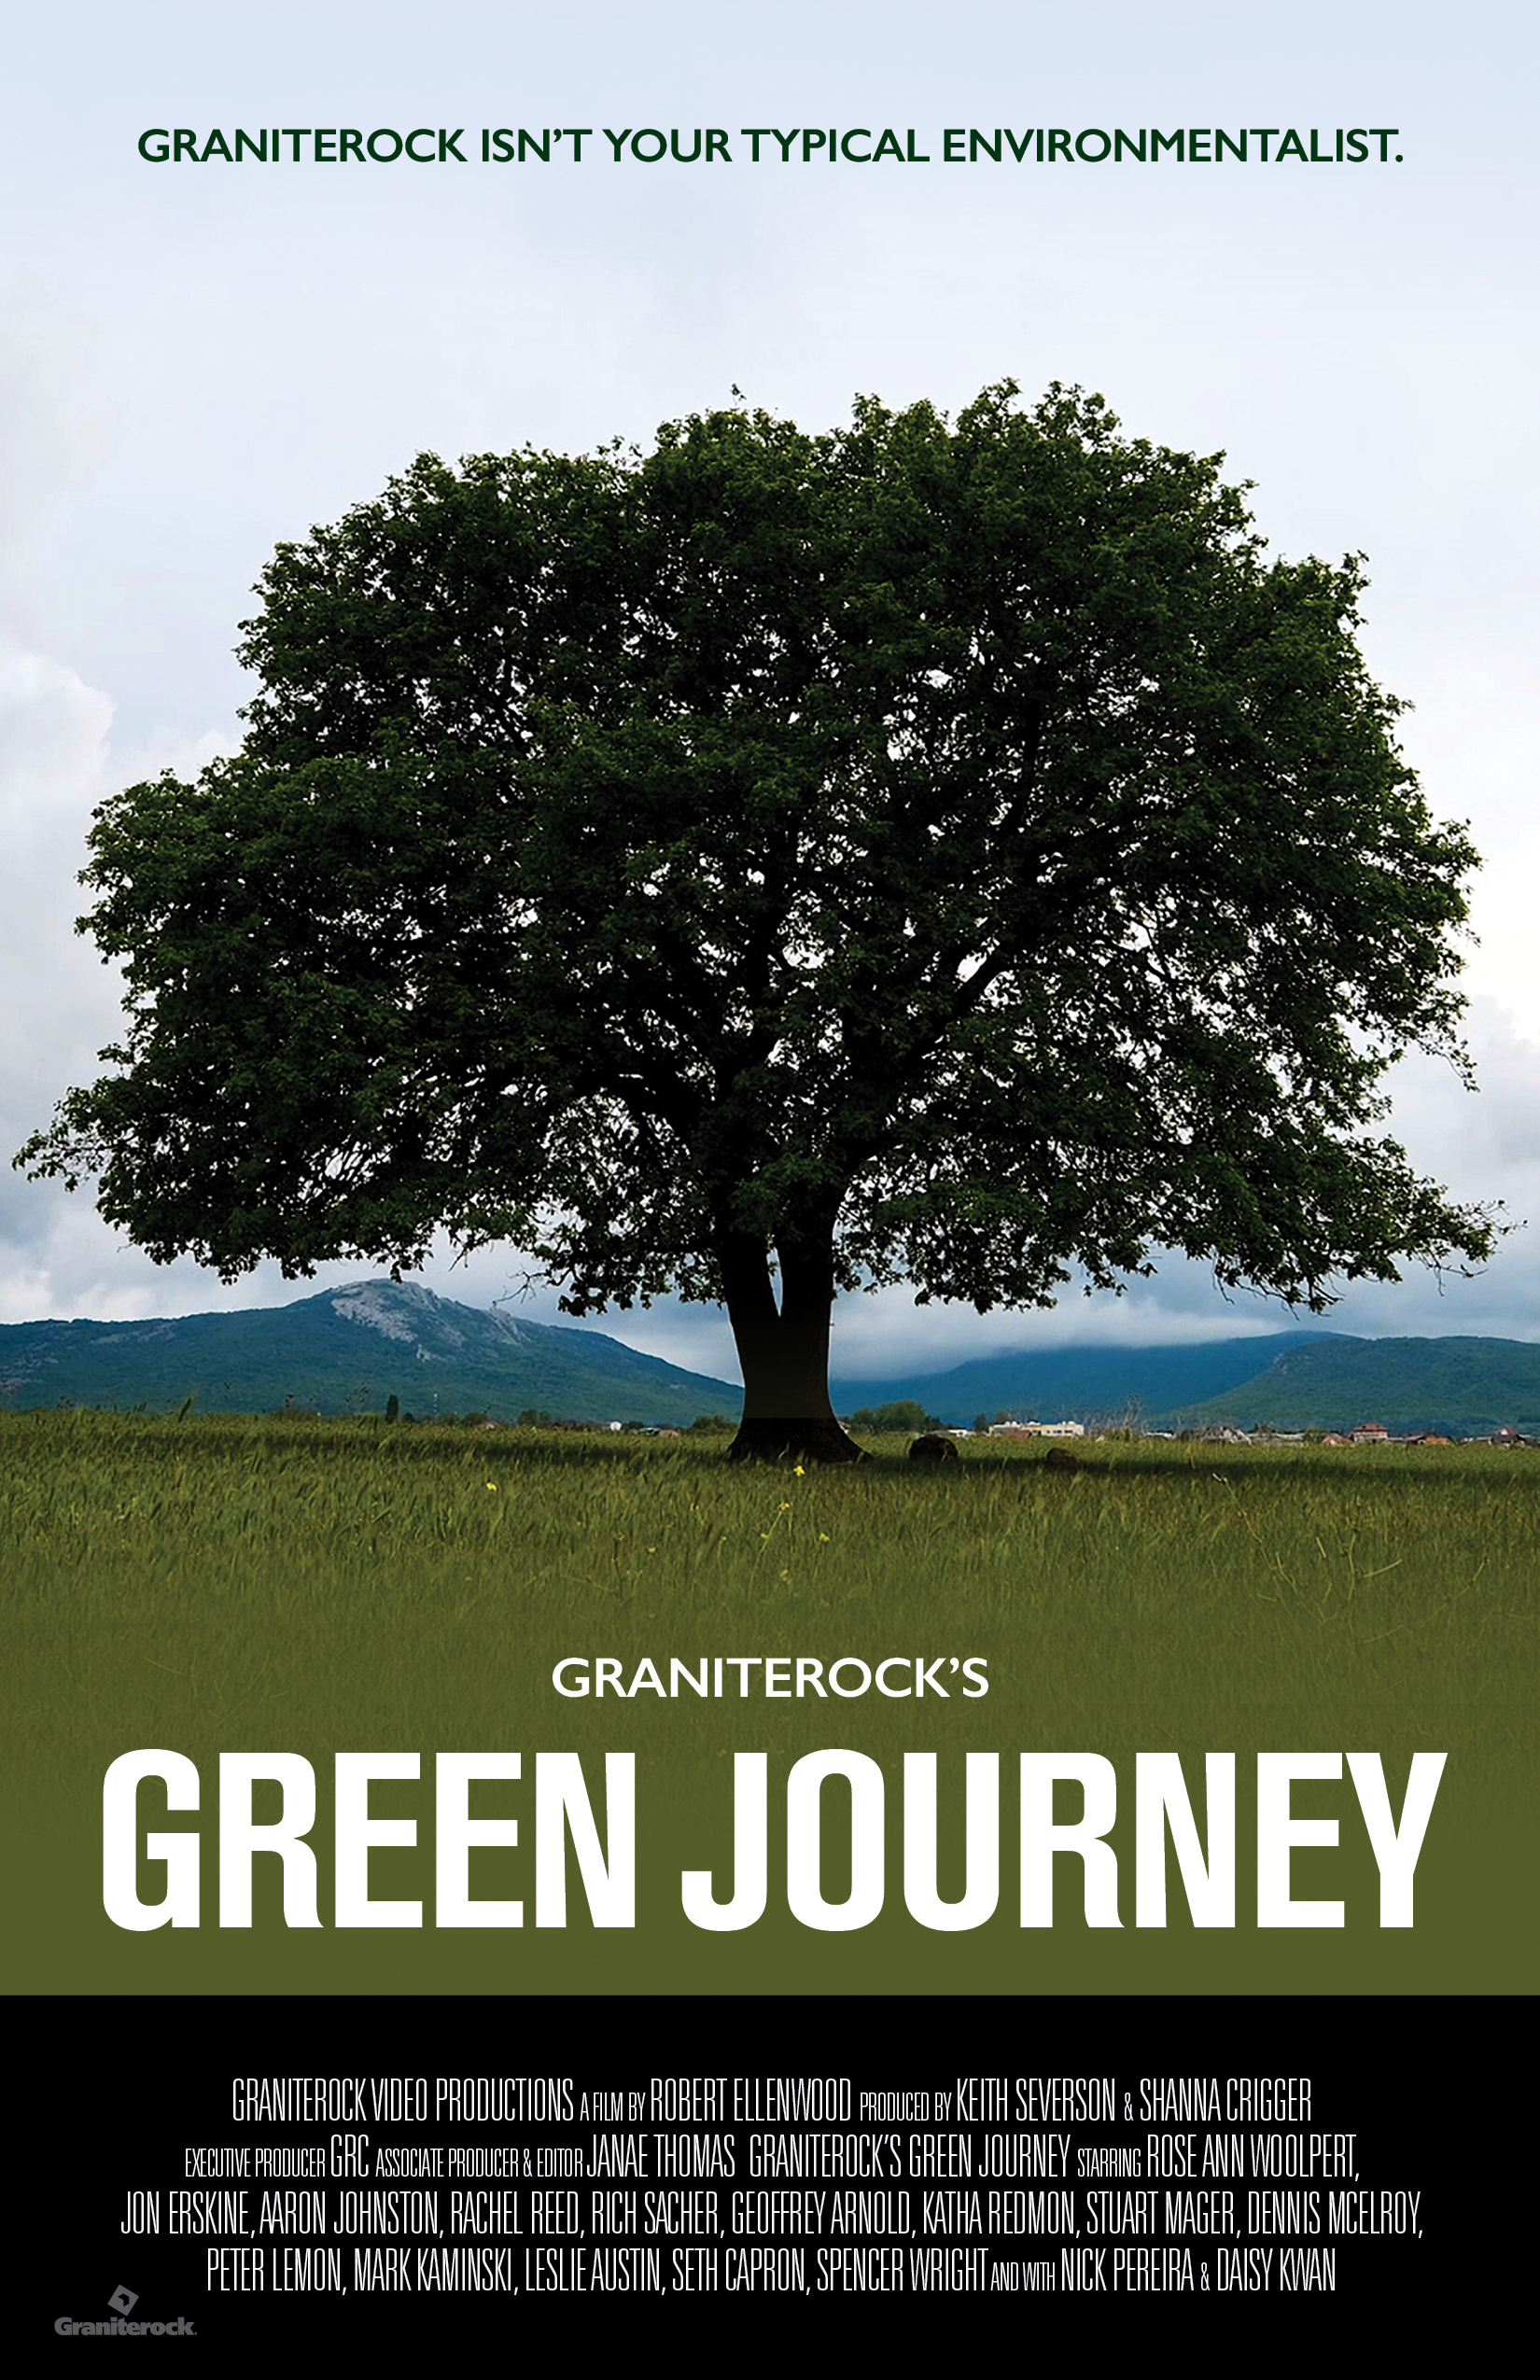 Graniterock wins global film award for dedication to sustainability